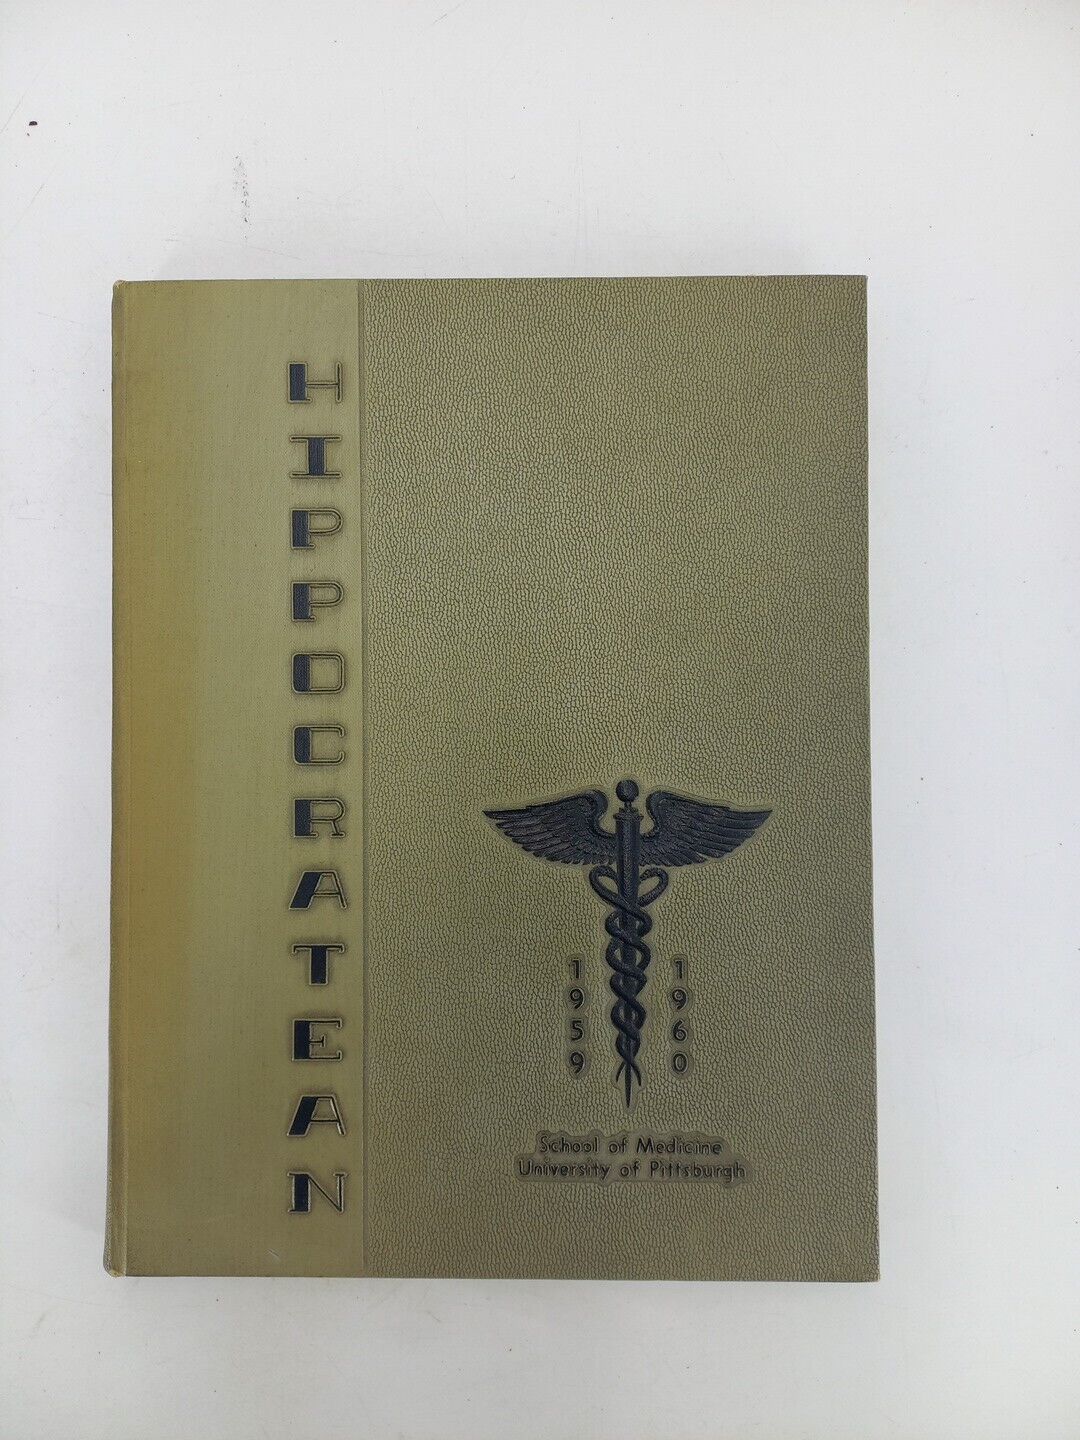 University of Pittsburgh School of Medicine Yearbook 1959-1960 Pennsylvania